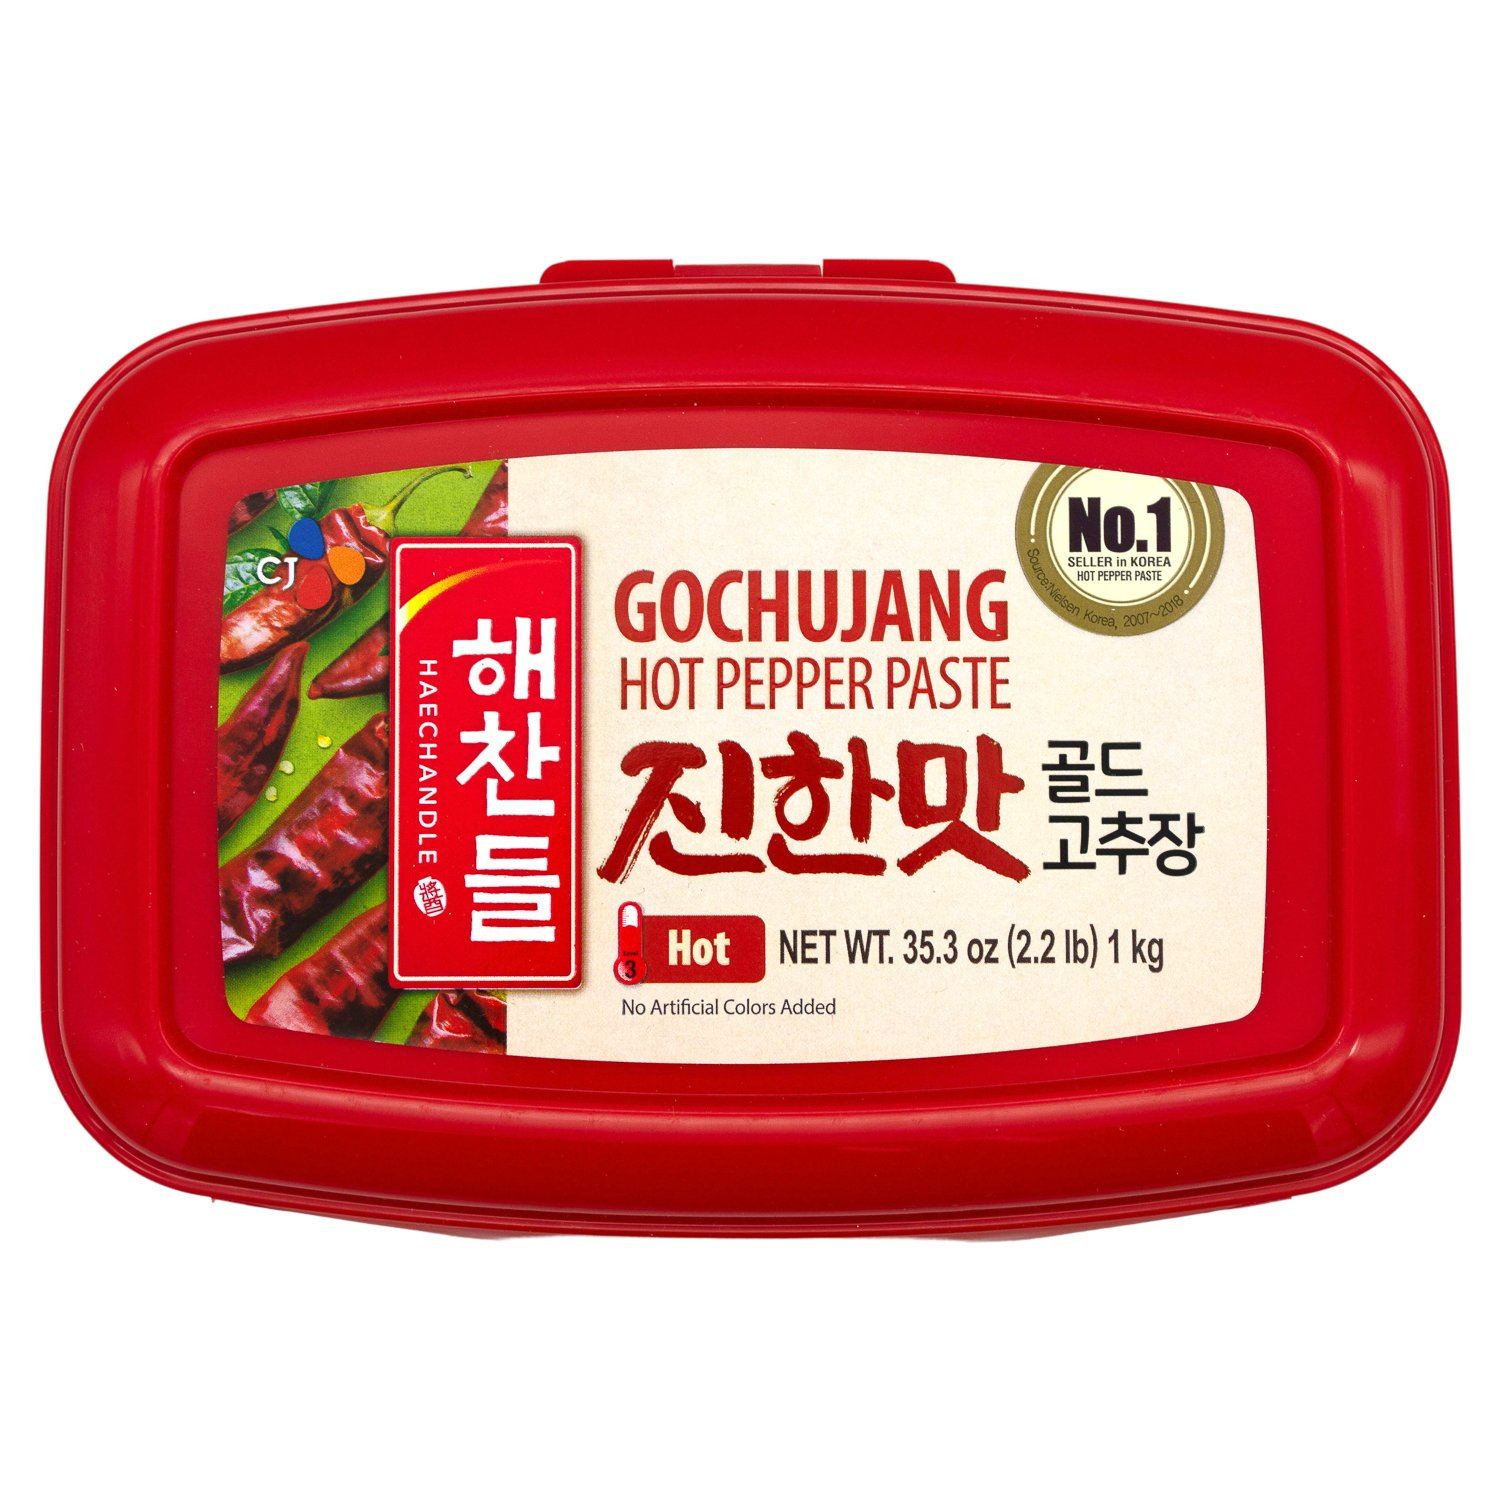 Haechandle Gochujang Hot Pepper Paste CJ 